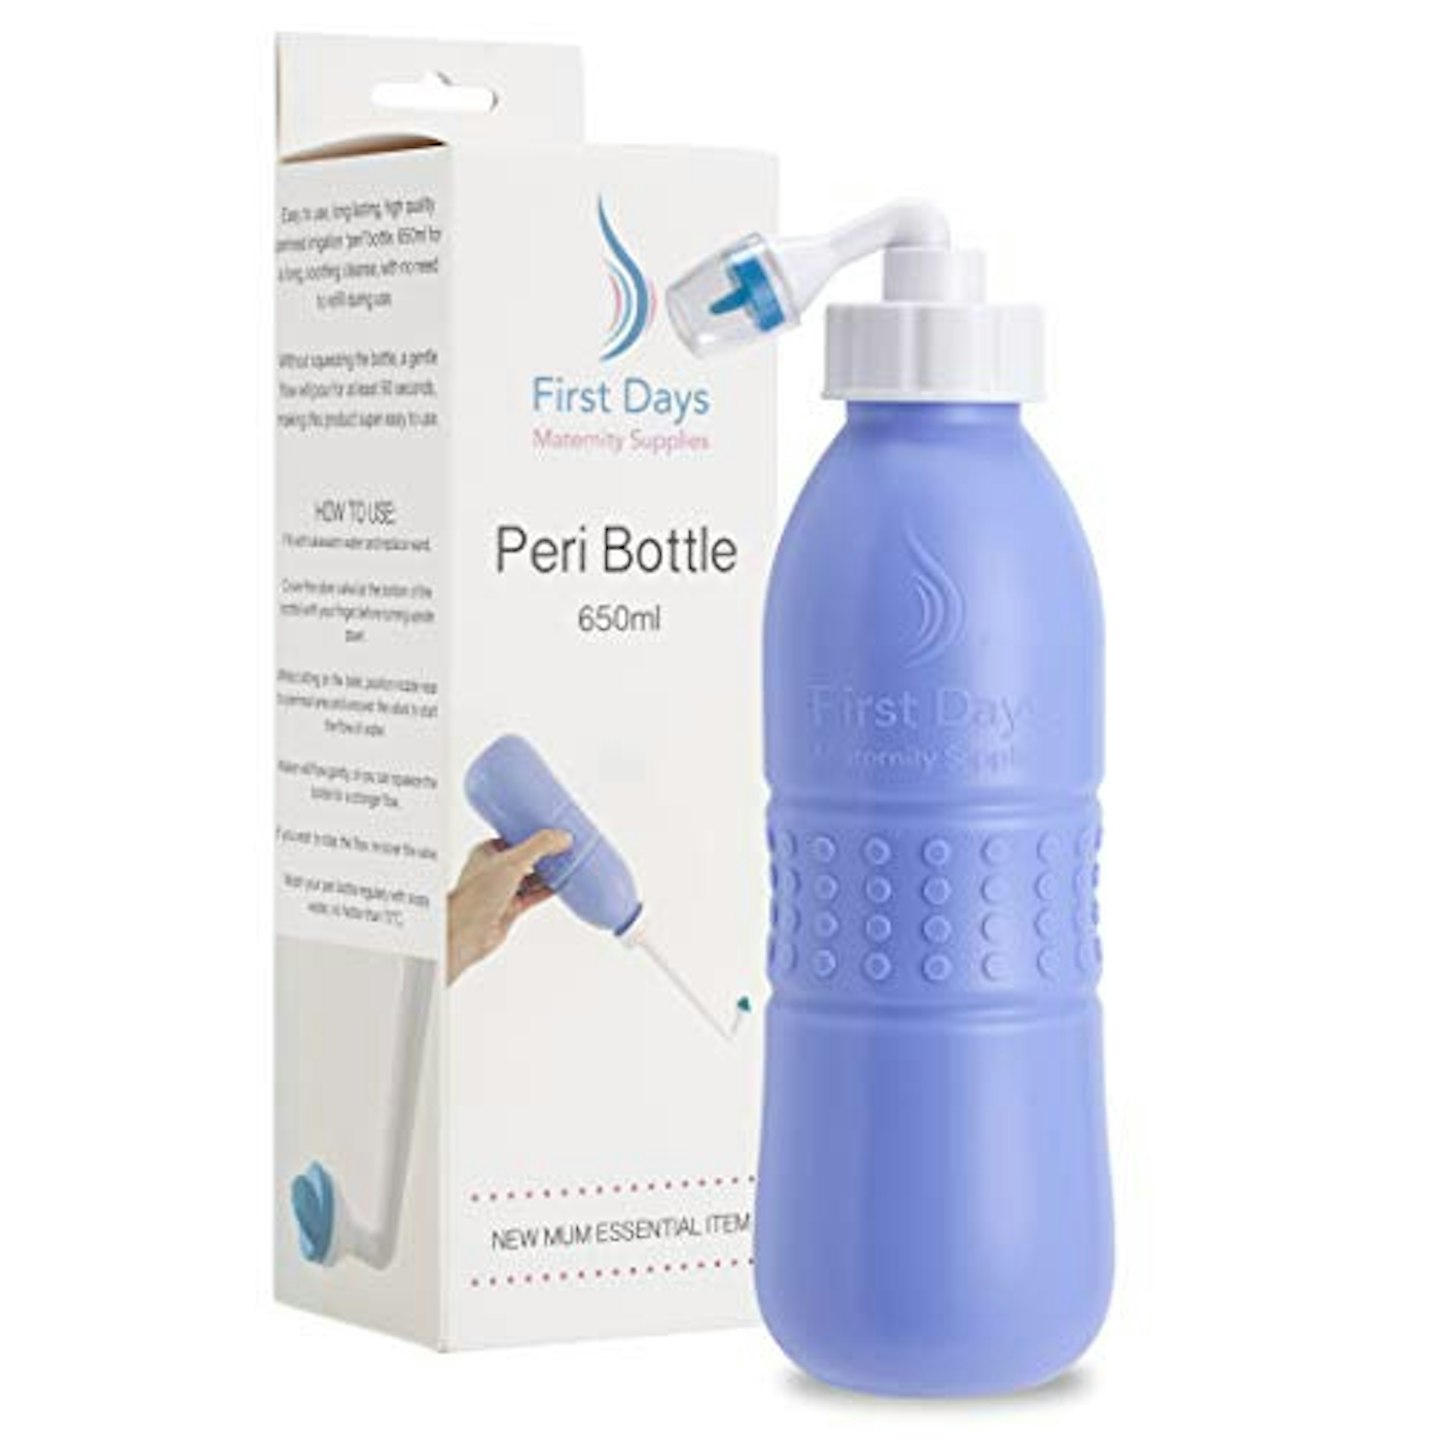 First Days Peri Bottle u2013 650ml